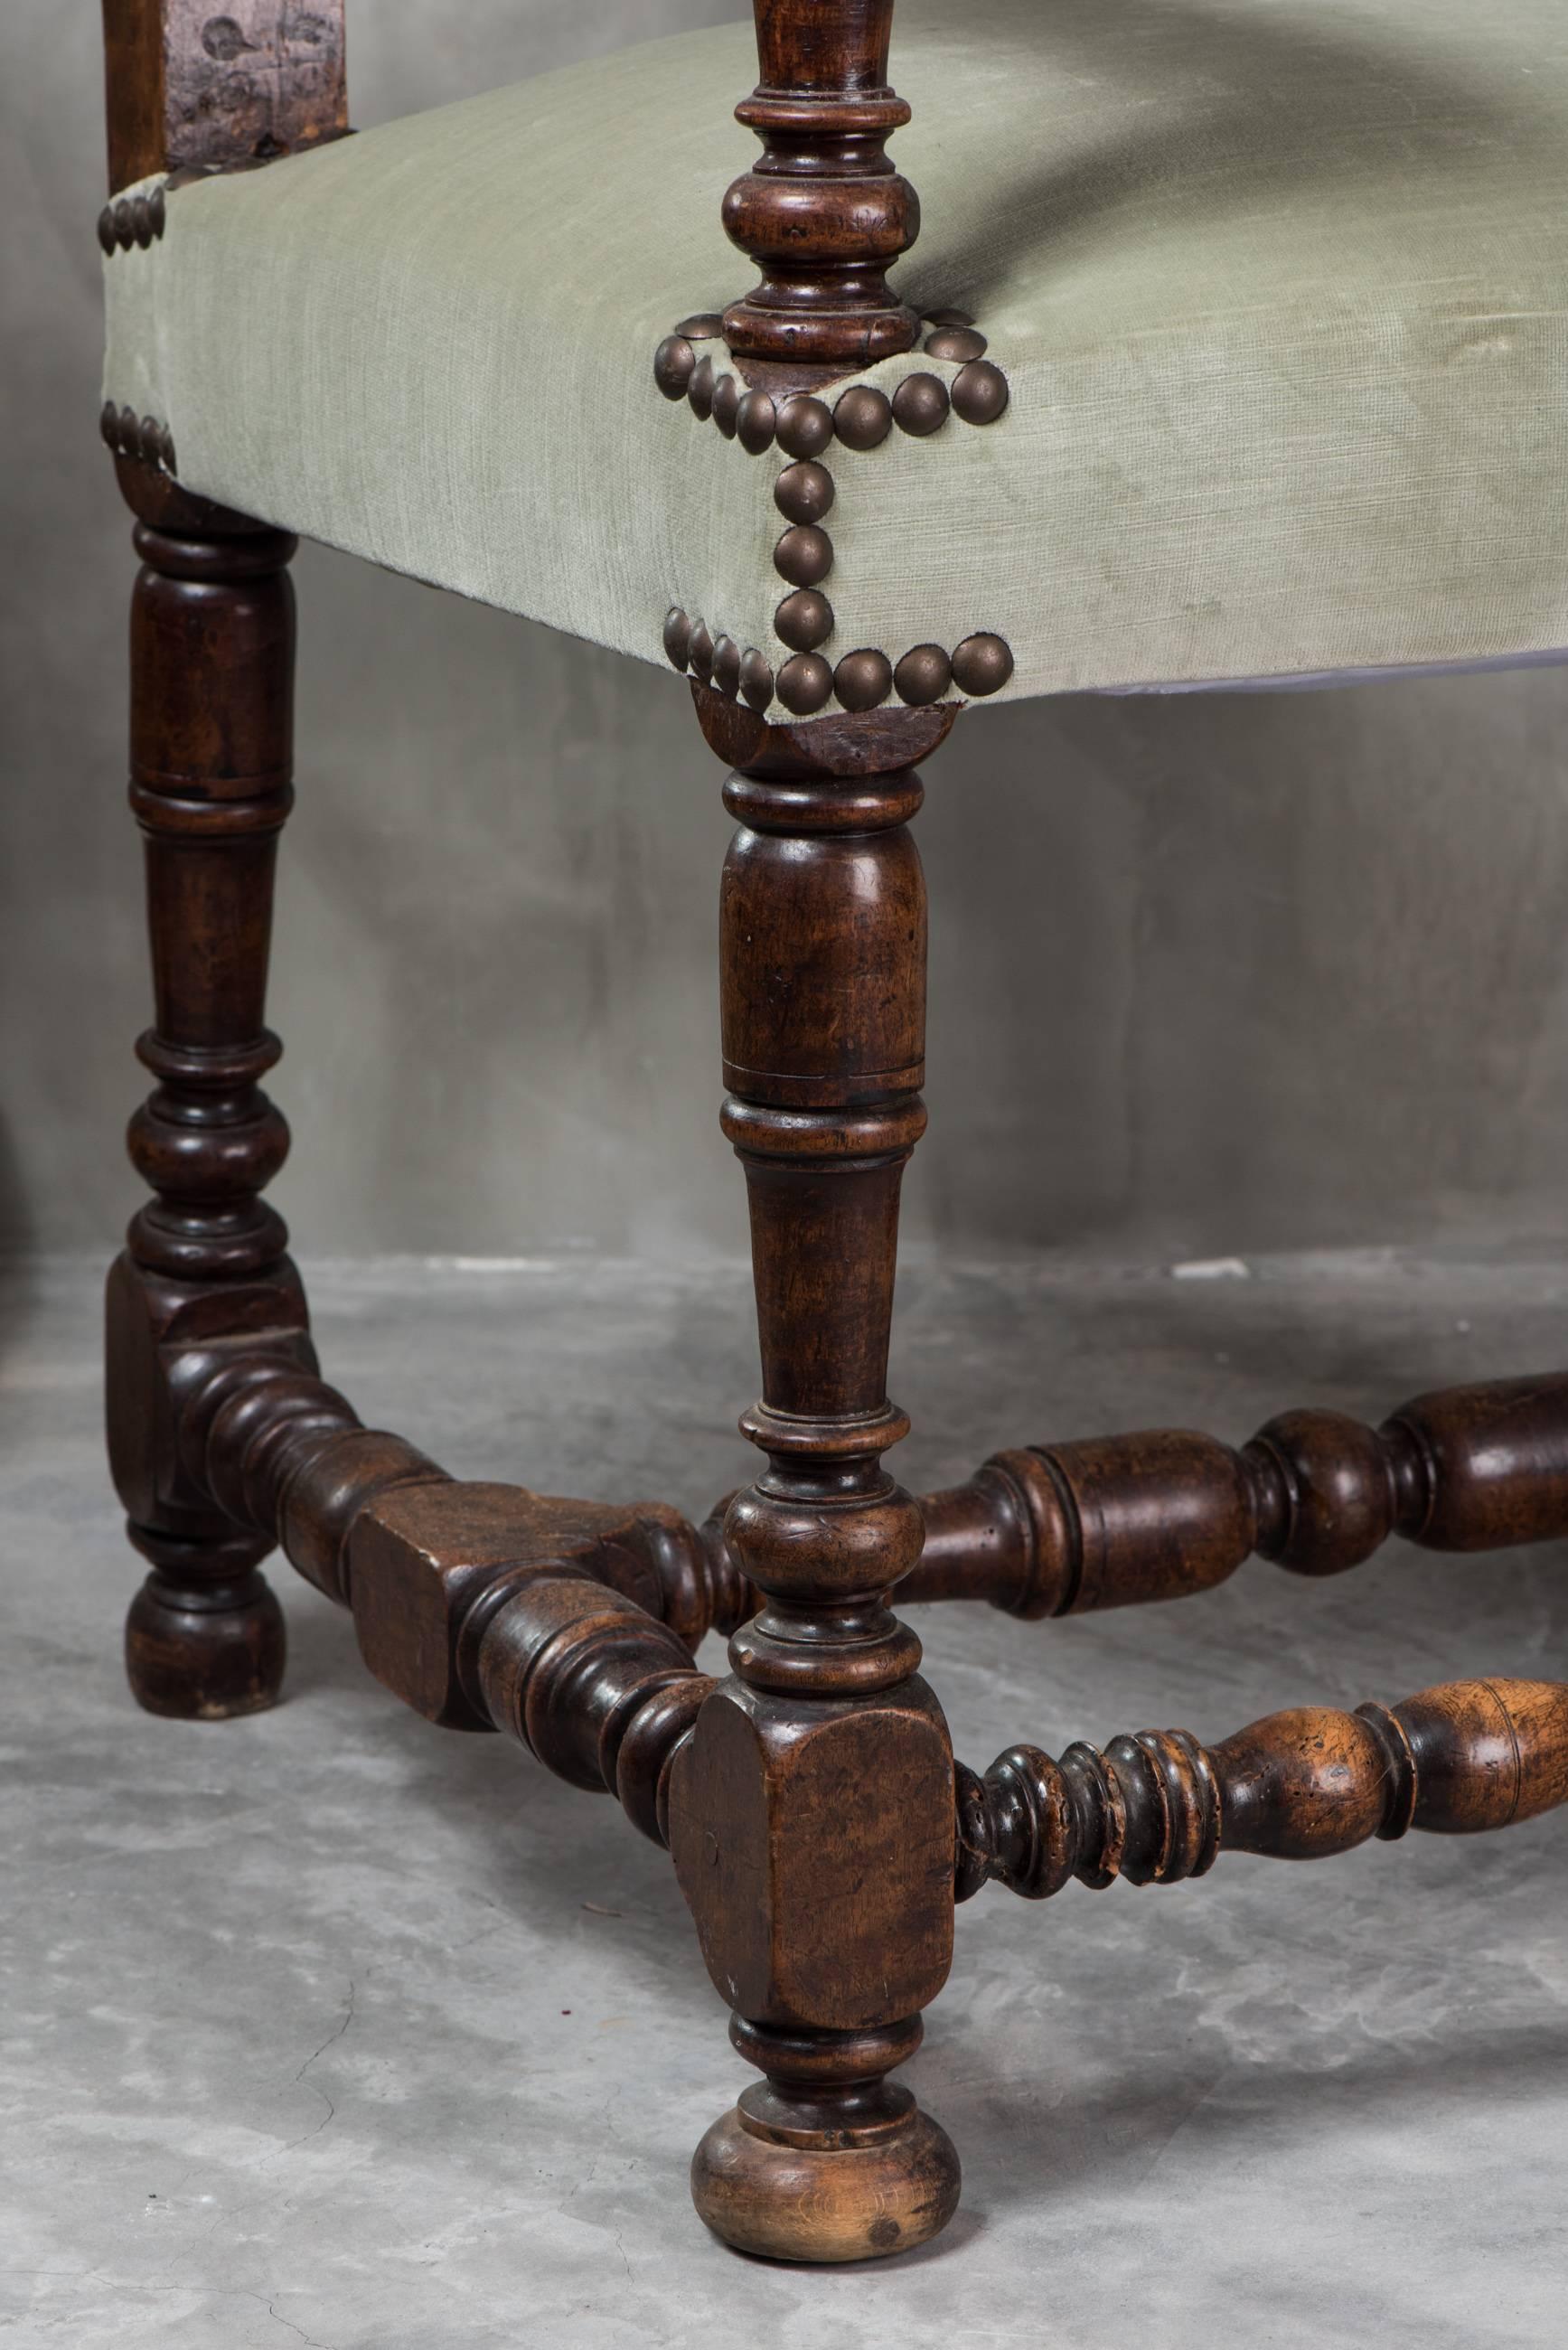 European 19th Century Jacobean / Renaissance Revival Carved Throne For Sale